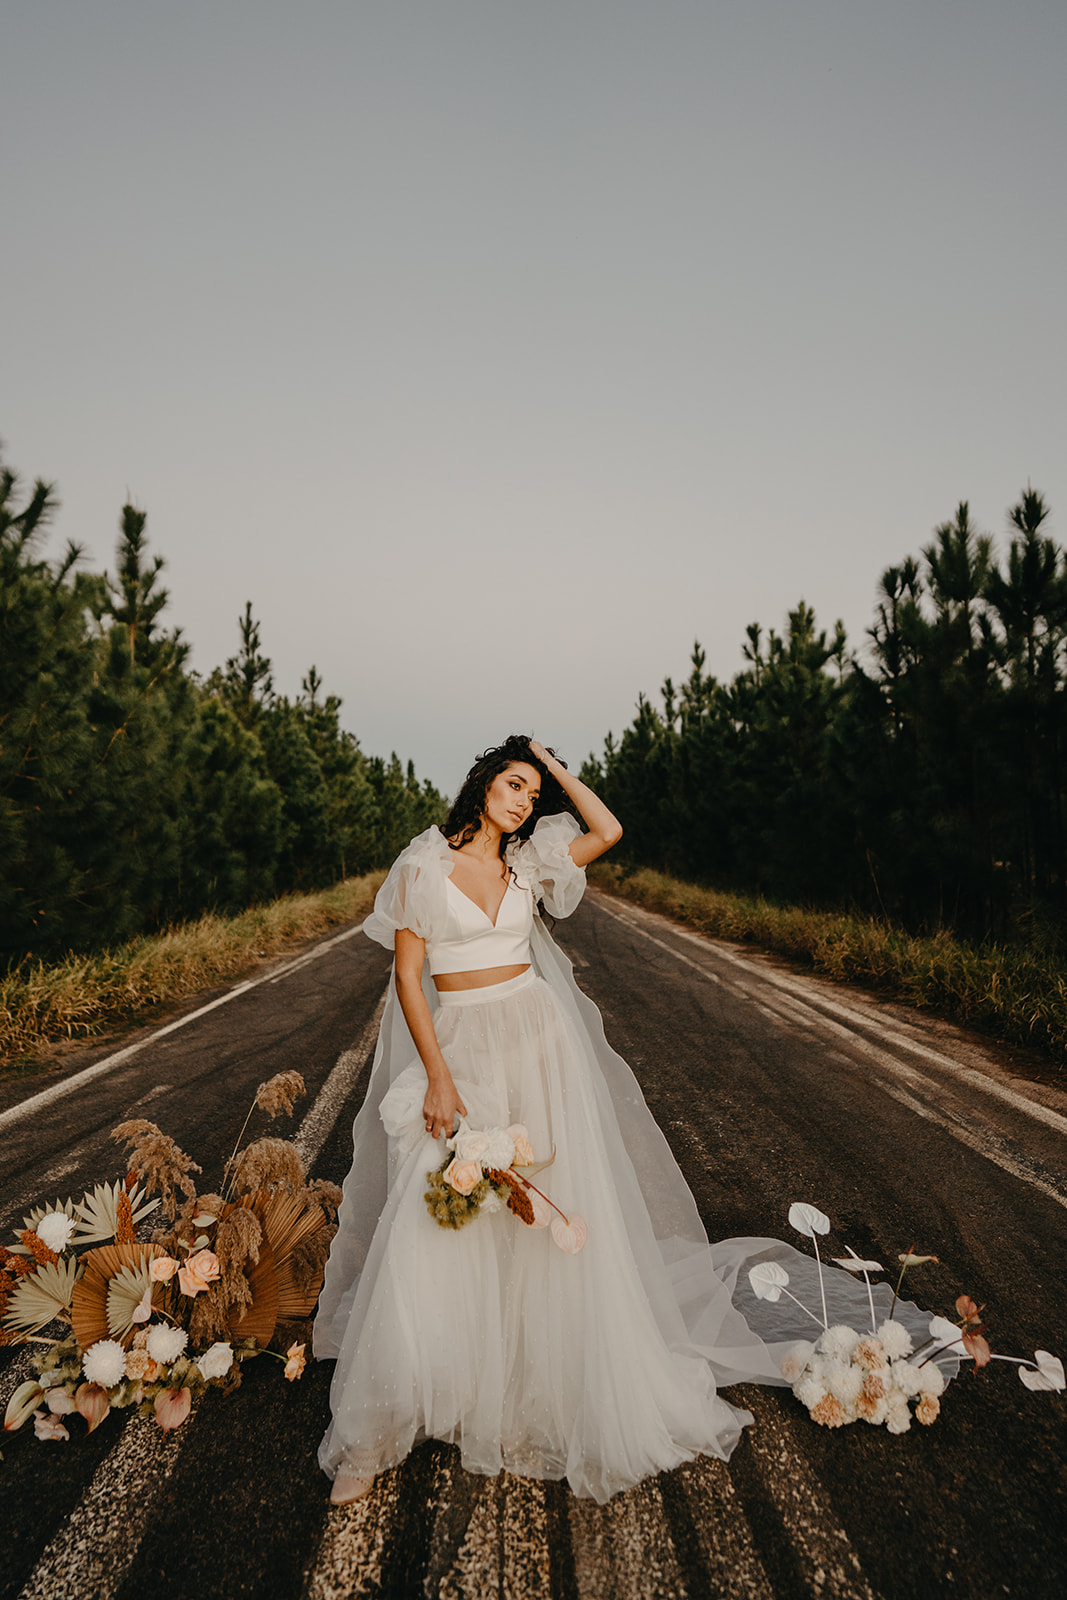 angela cannavo photography karen willis holmes skirt alternative bridal bouquet florals